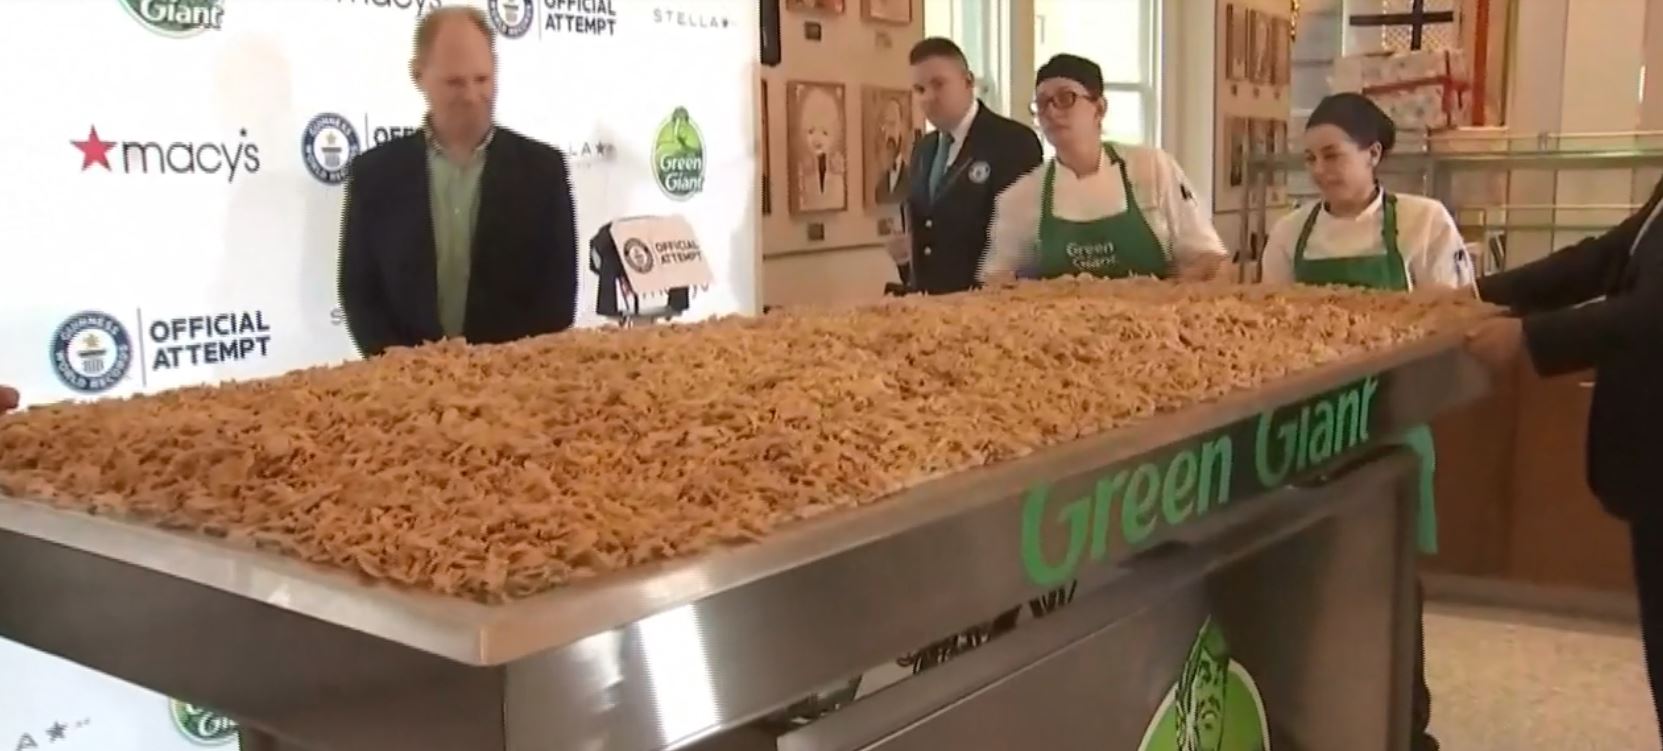 1,000-pound green bean casserole